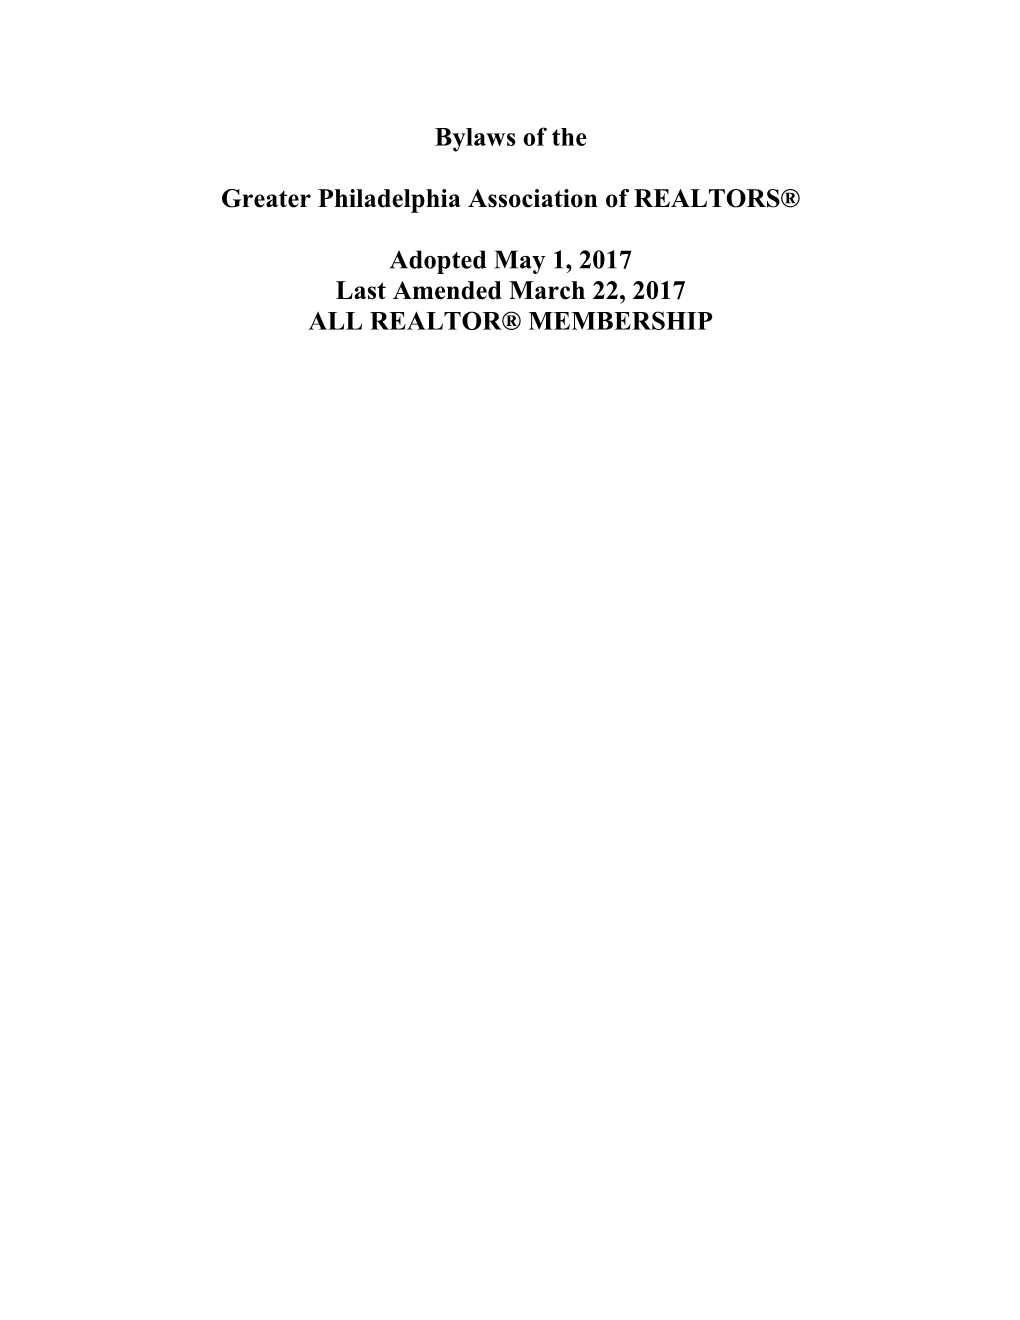 Greater Philadelphia Association of REALTORS